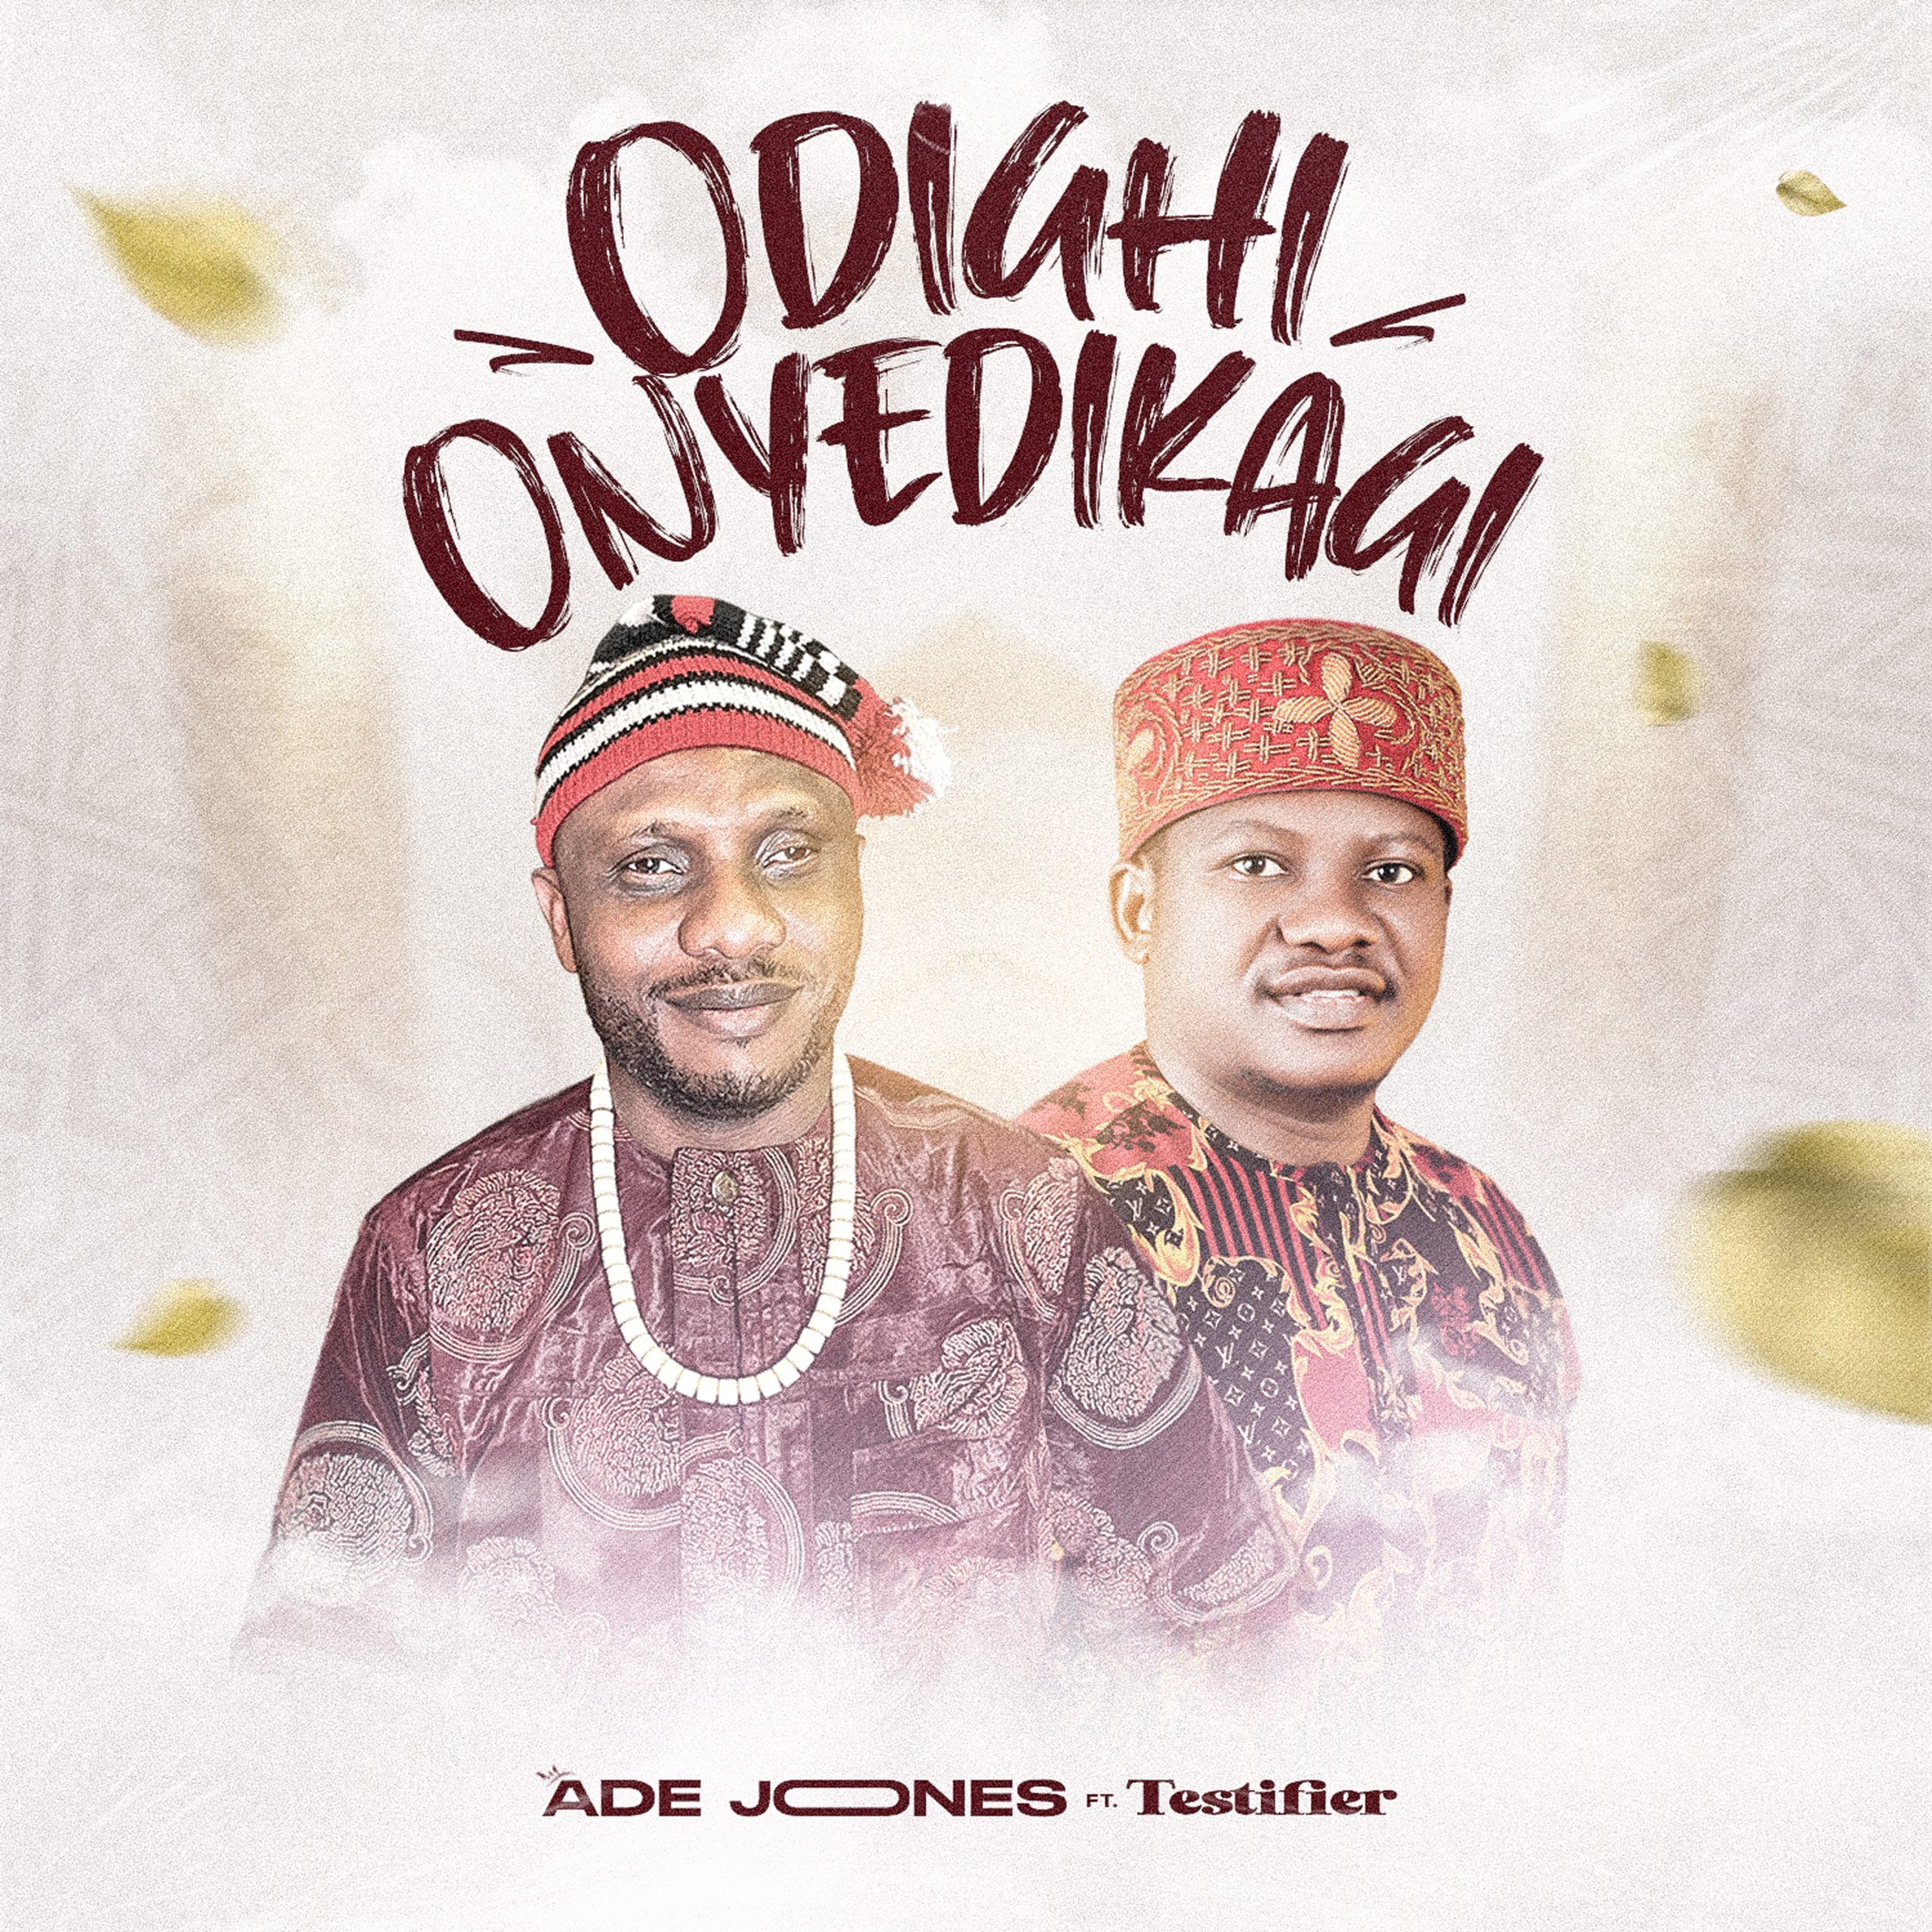 Odighi Onyedikagi by Ade Jones feat. Testifier